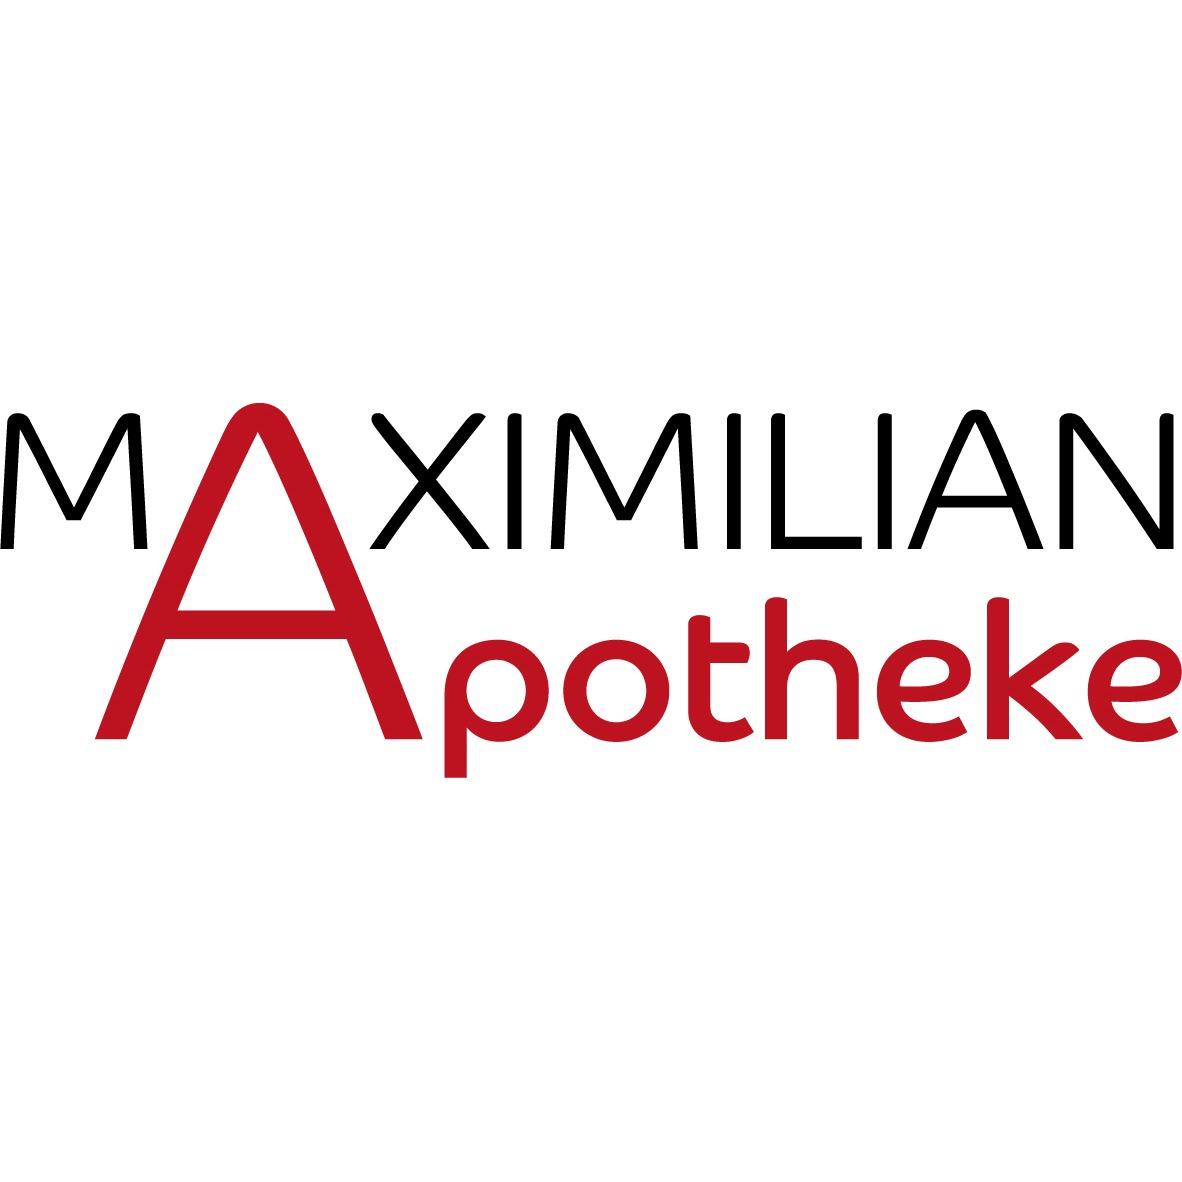 Maximilian Apotheke Logo